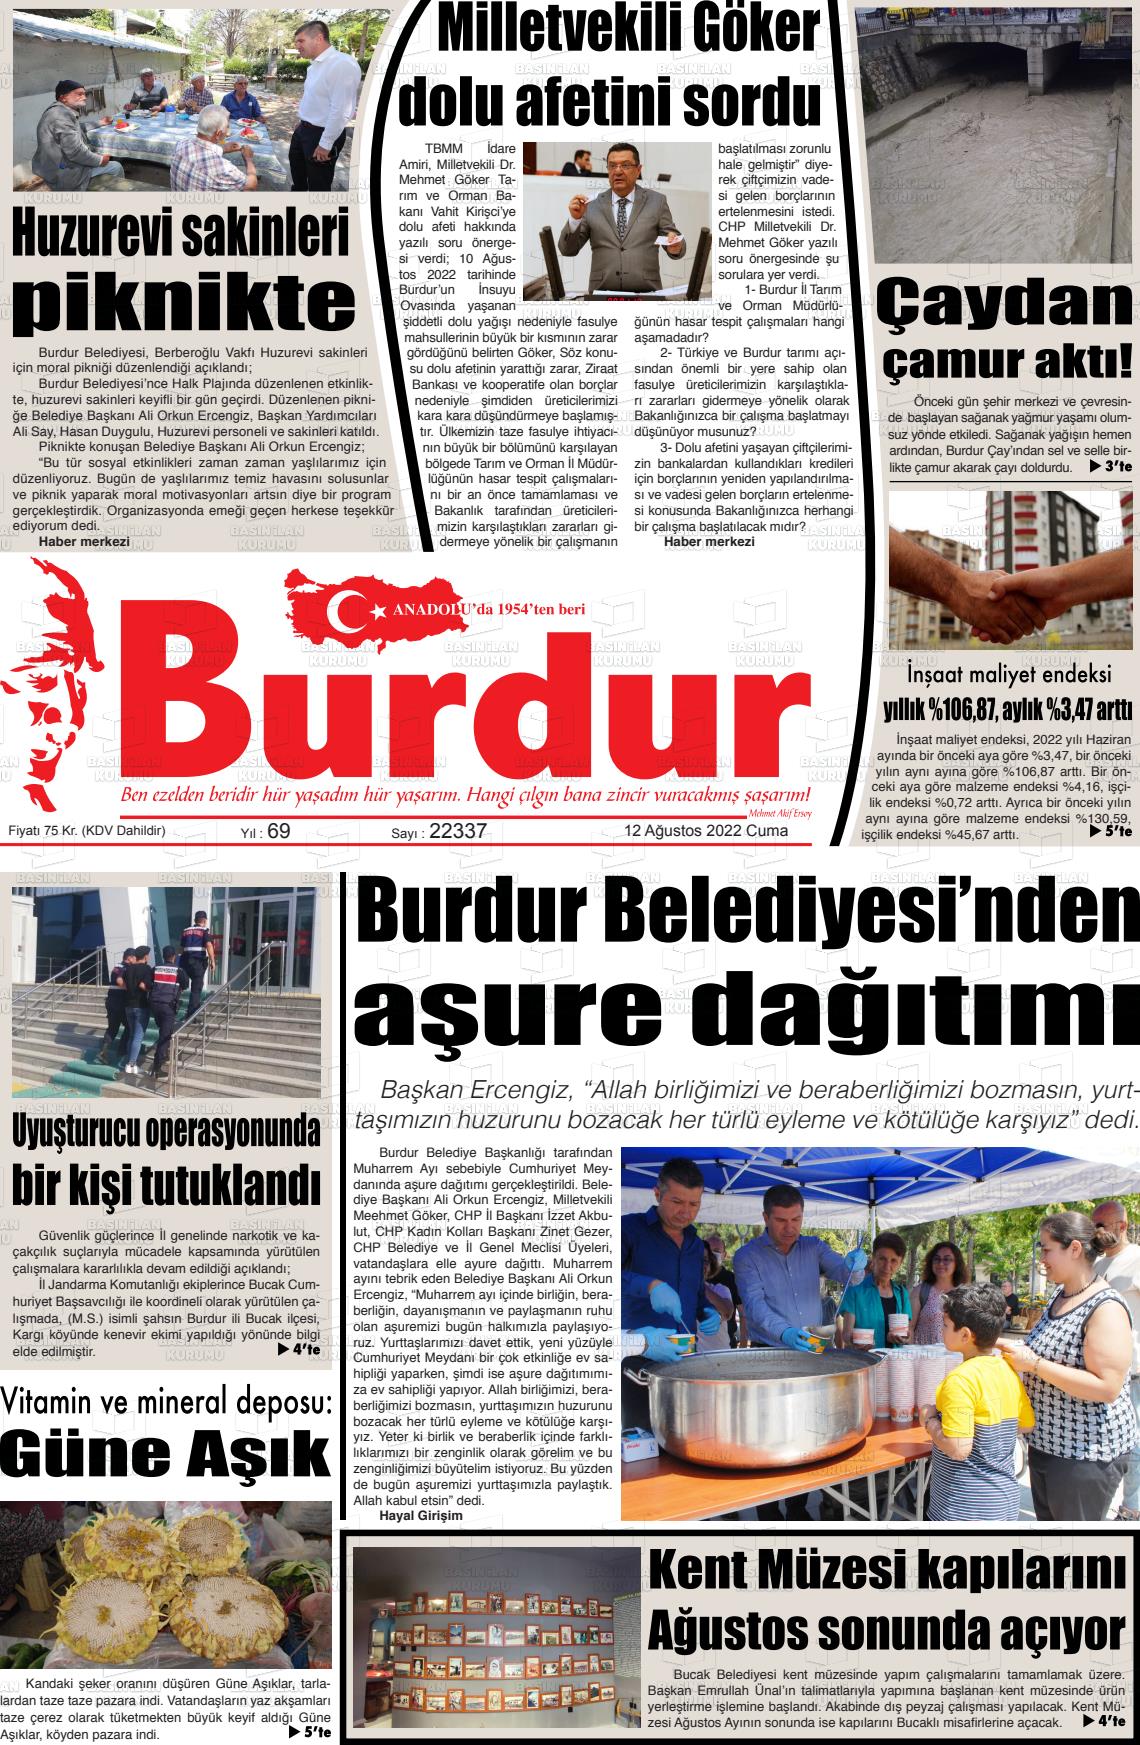 12 Ağustos 2022 Burdur Gazete Manşeti